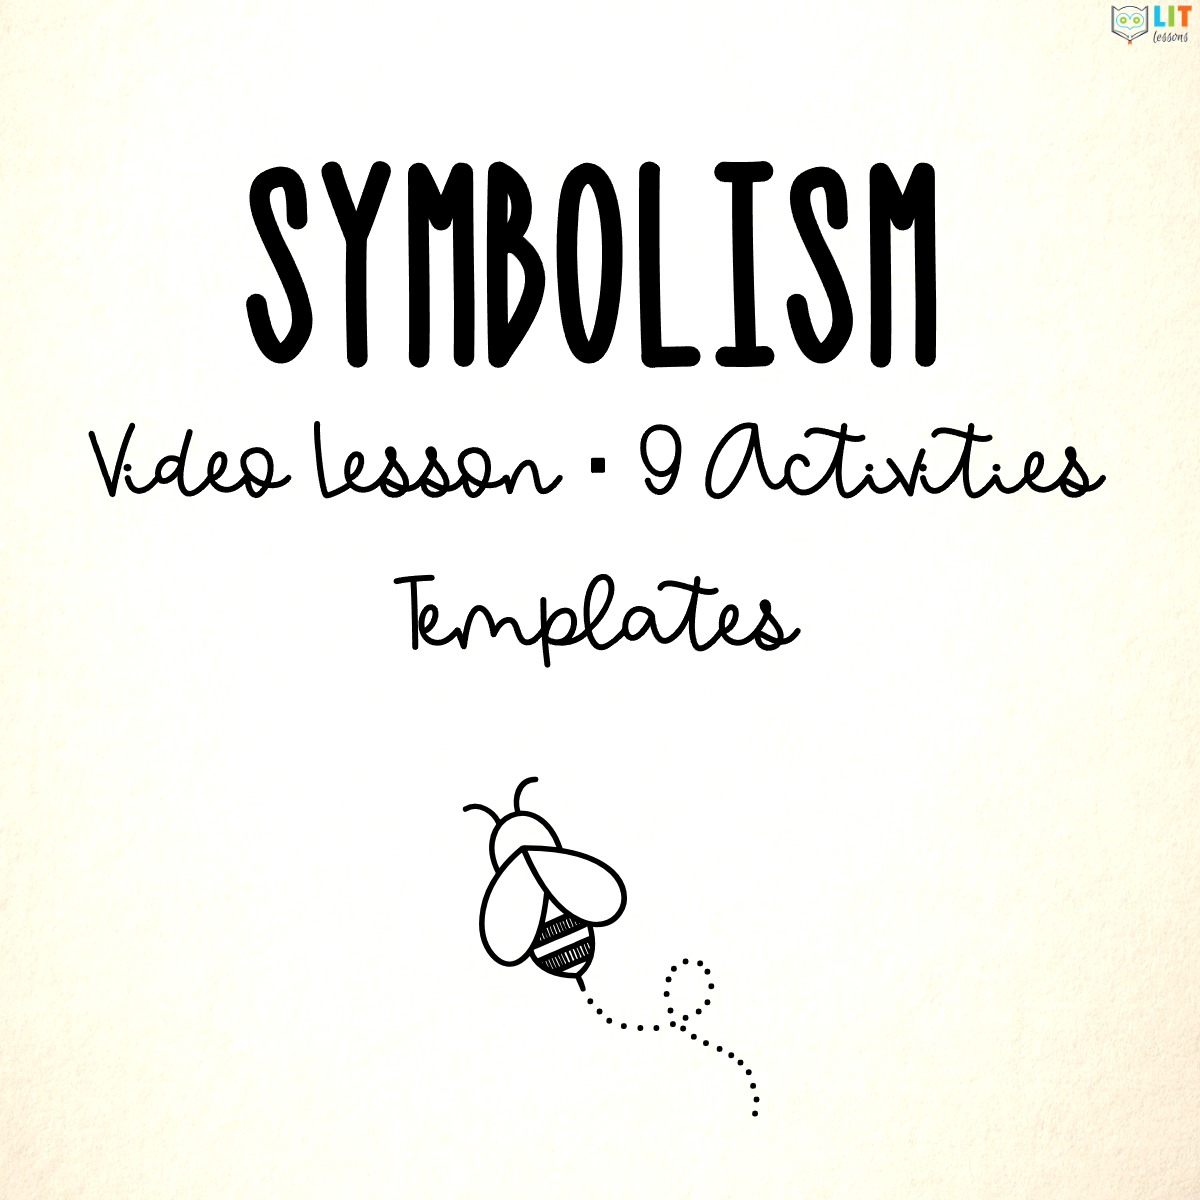 Symbolism Activities & Video Lesson